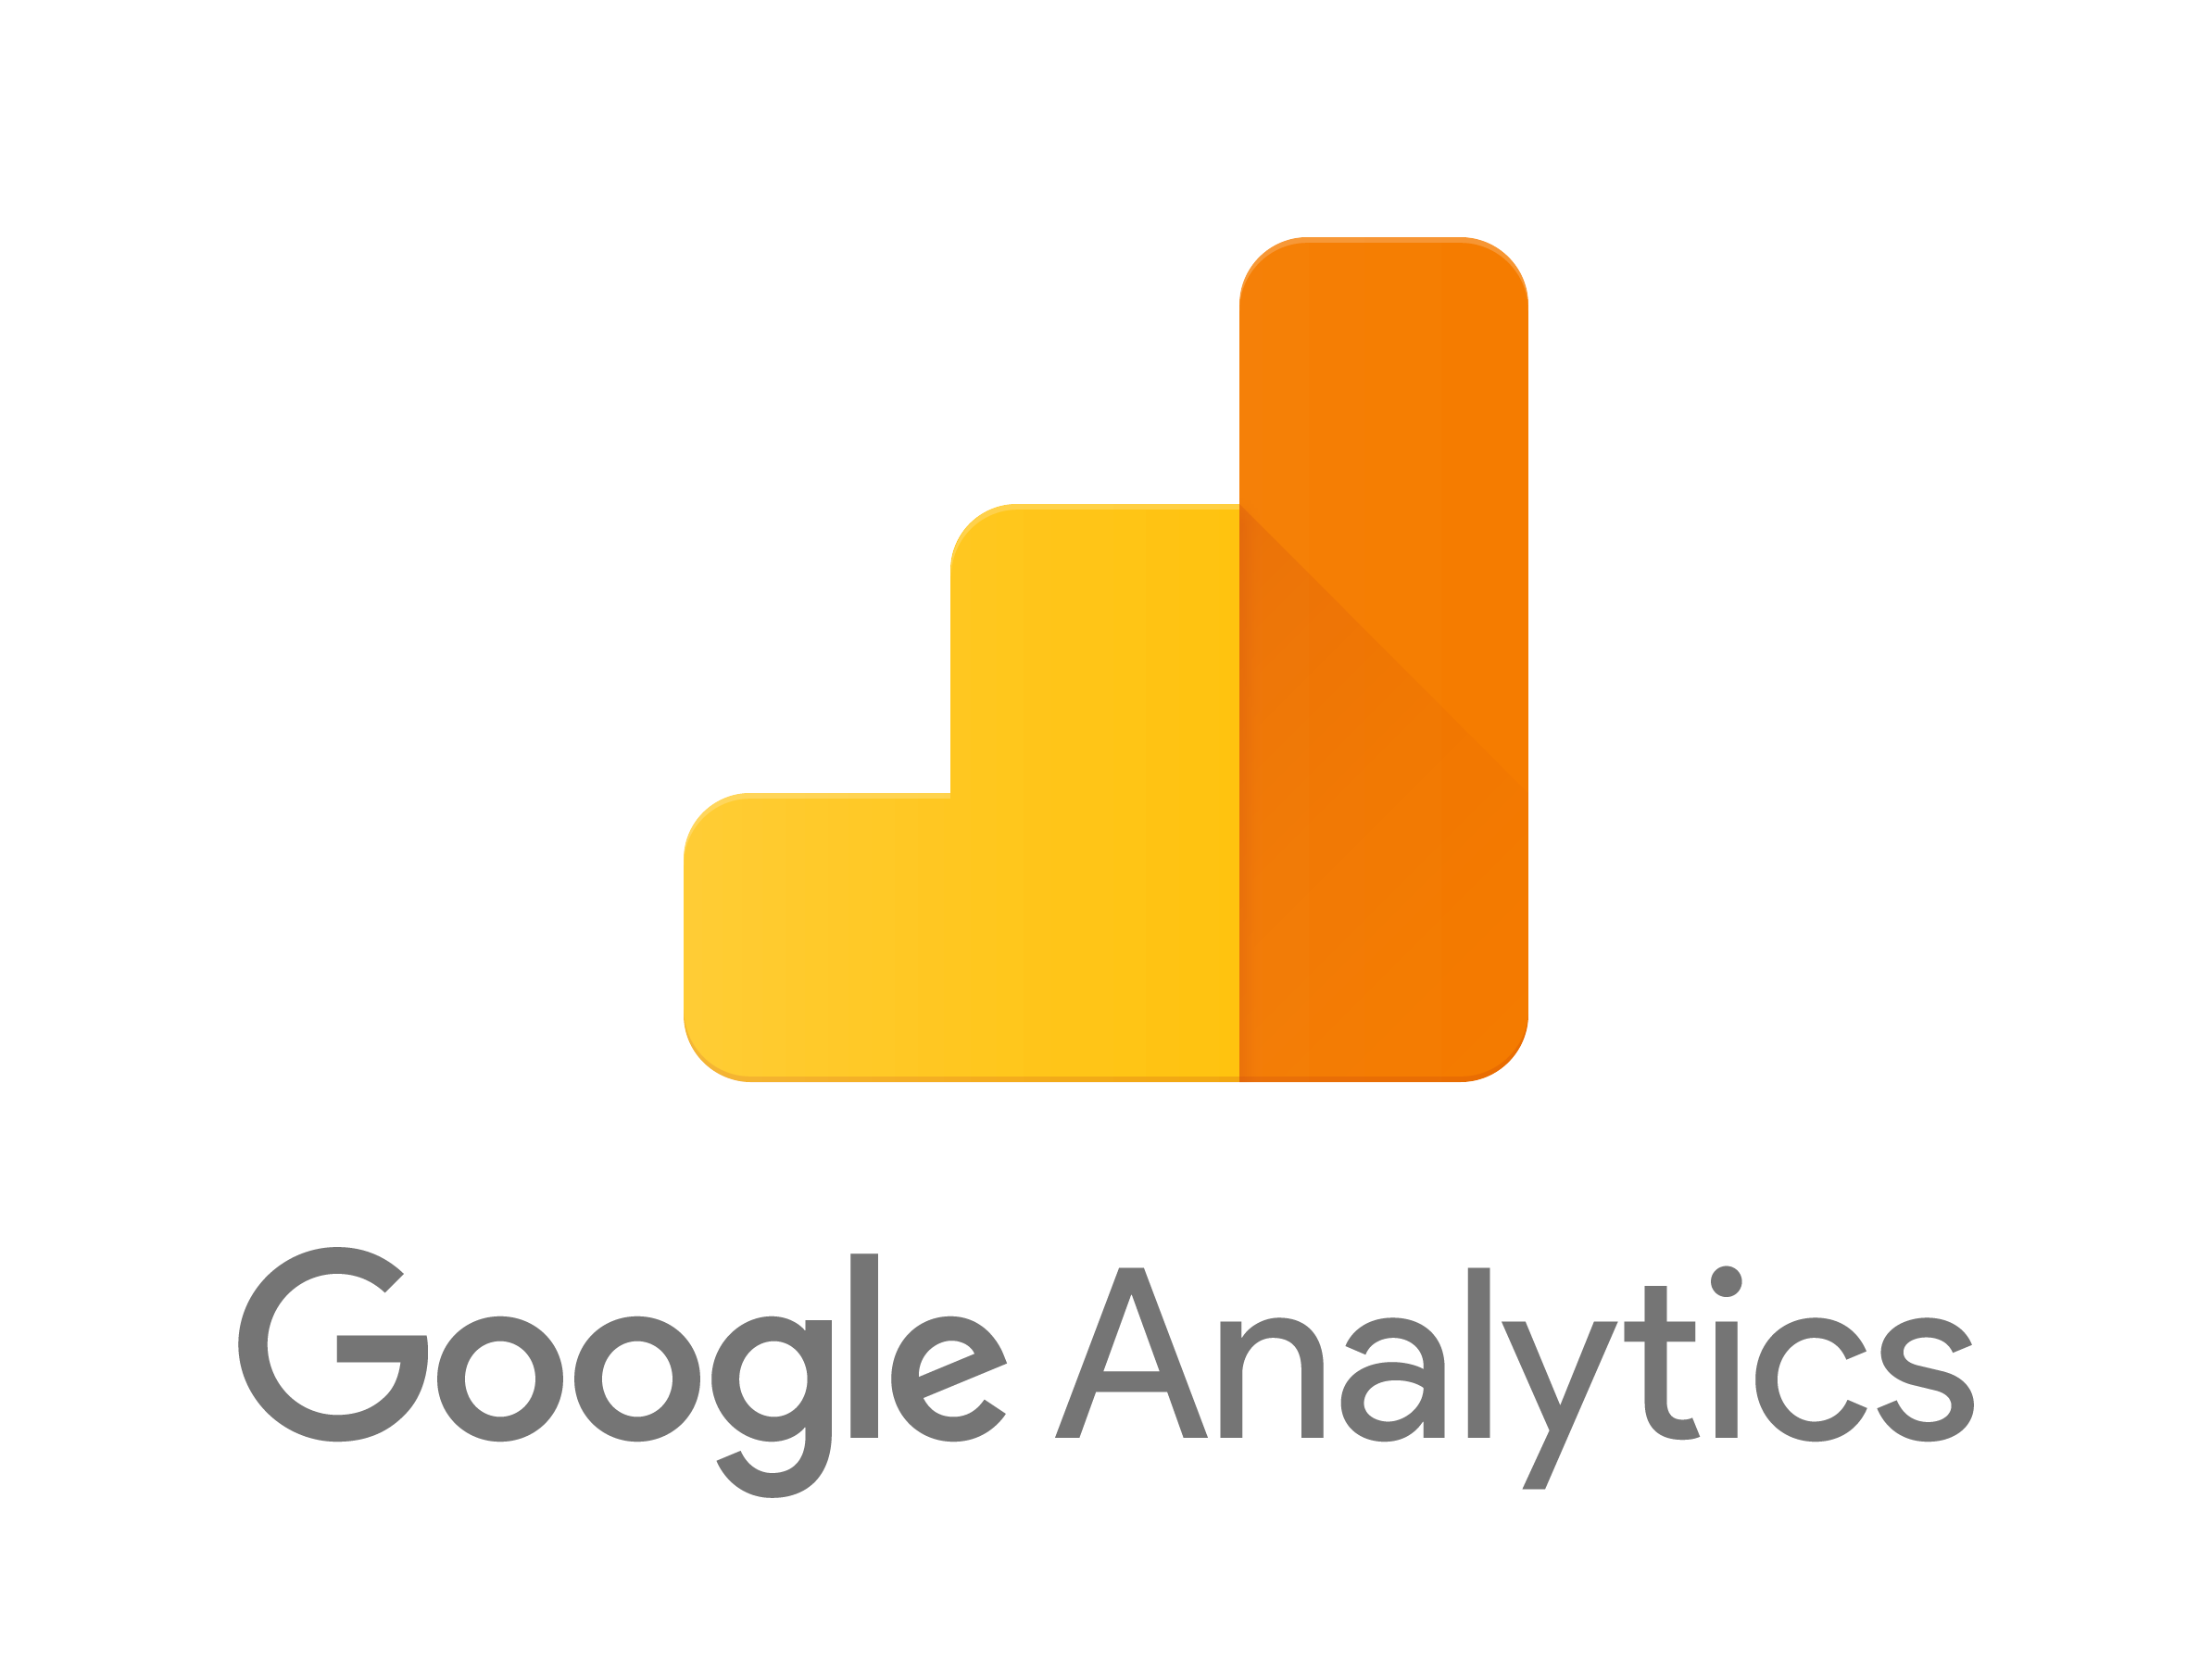 Google Logo Google Analytics 